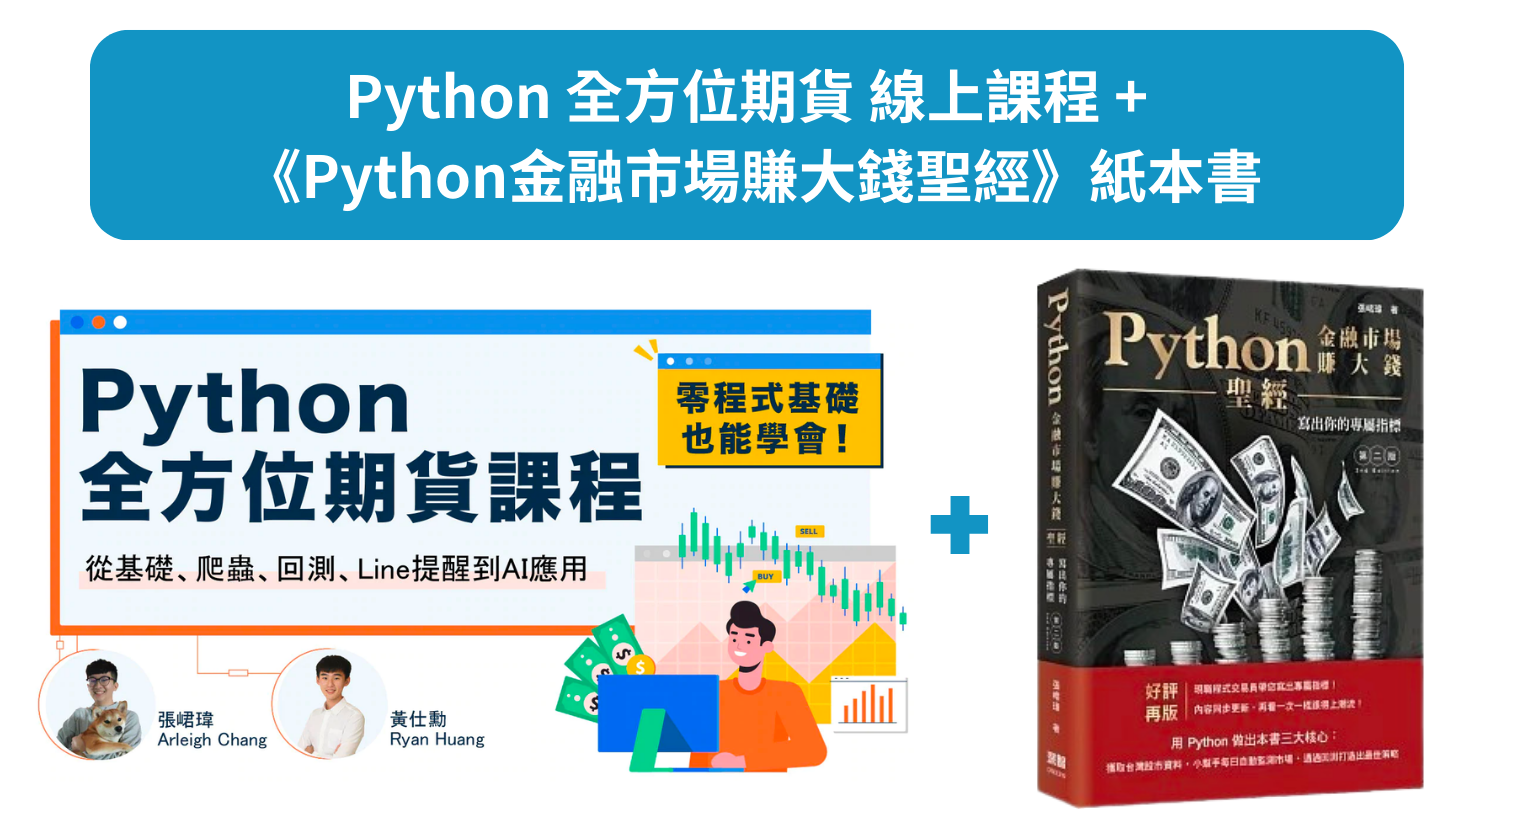 Python全方位期貨課程 +《Python金融市場賺大錢聖經》紙本書